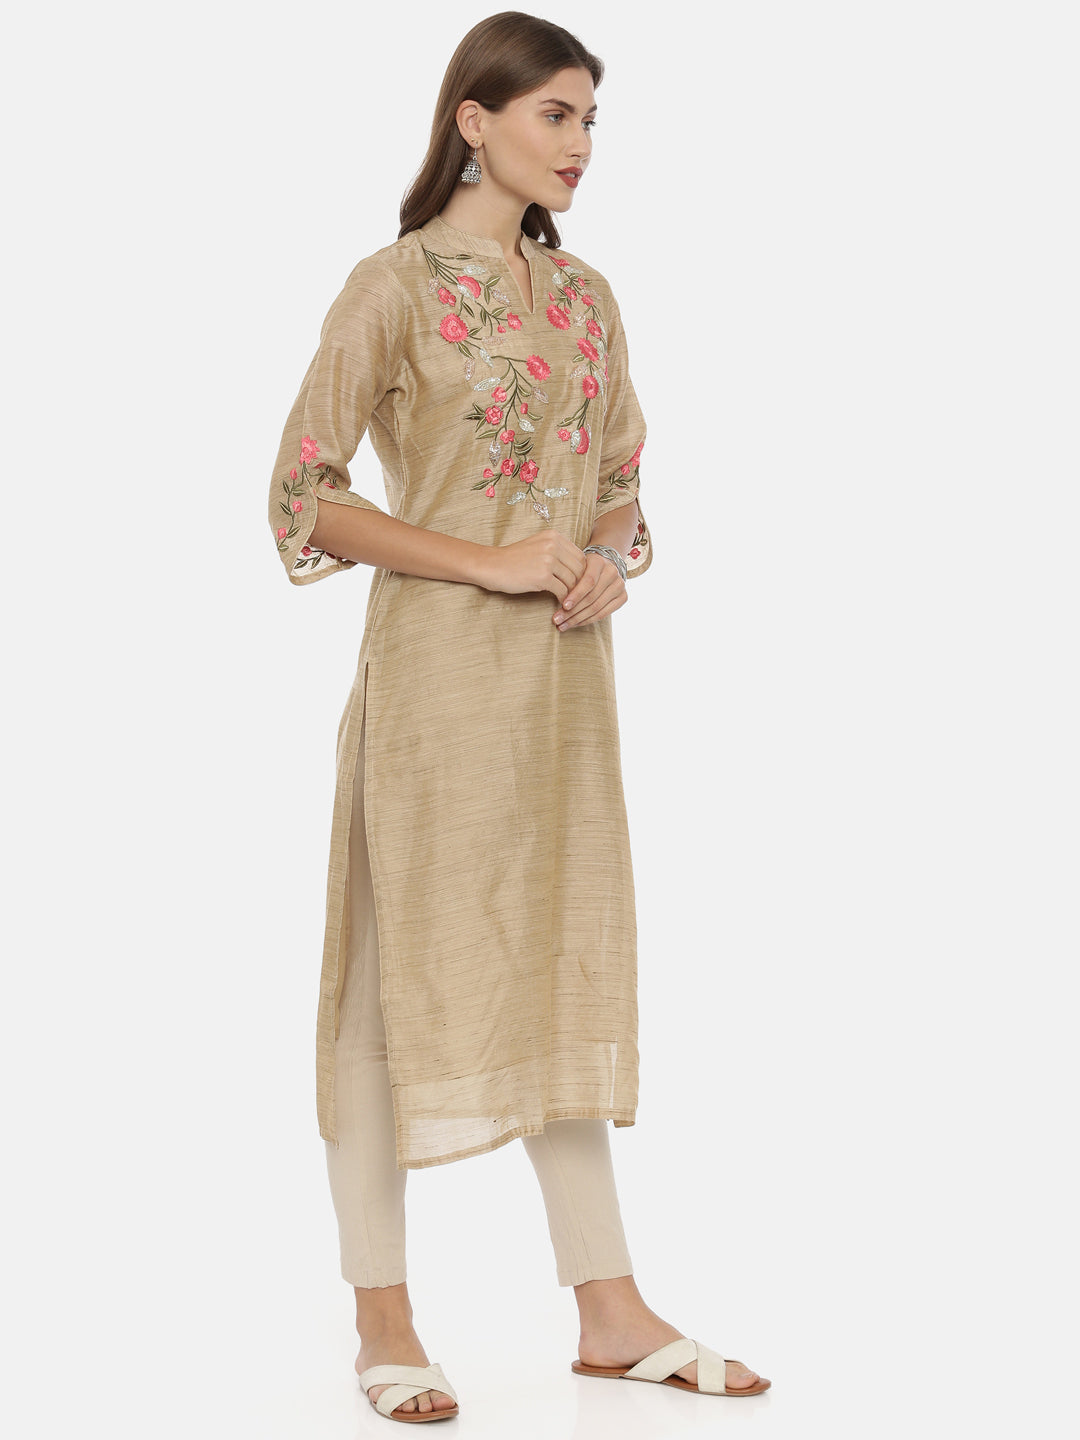 Neeru's Beige Color Chanderi Fabric Tunic